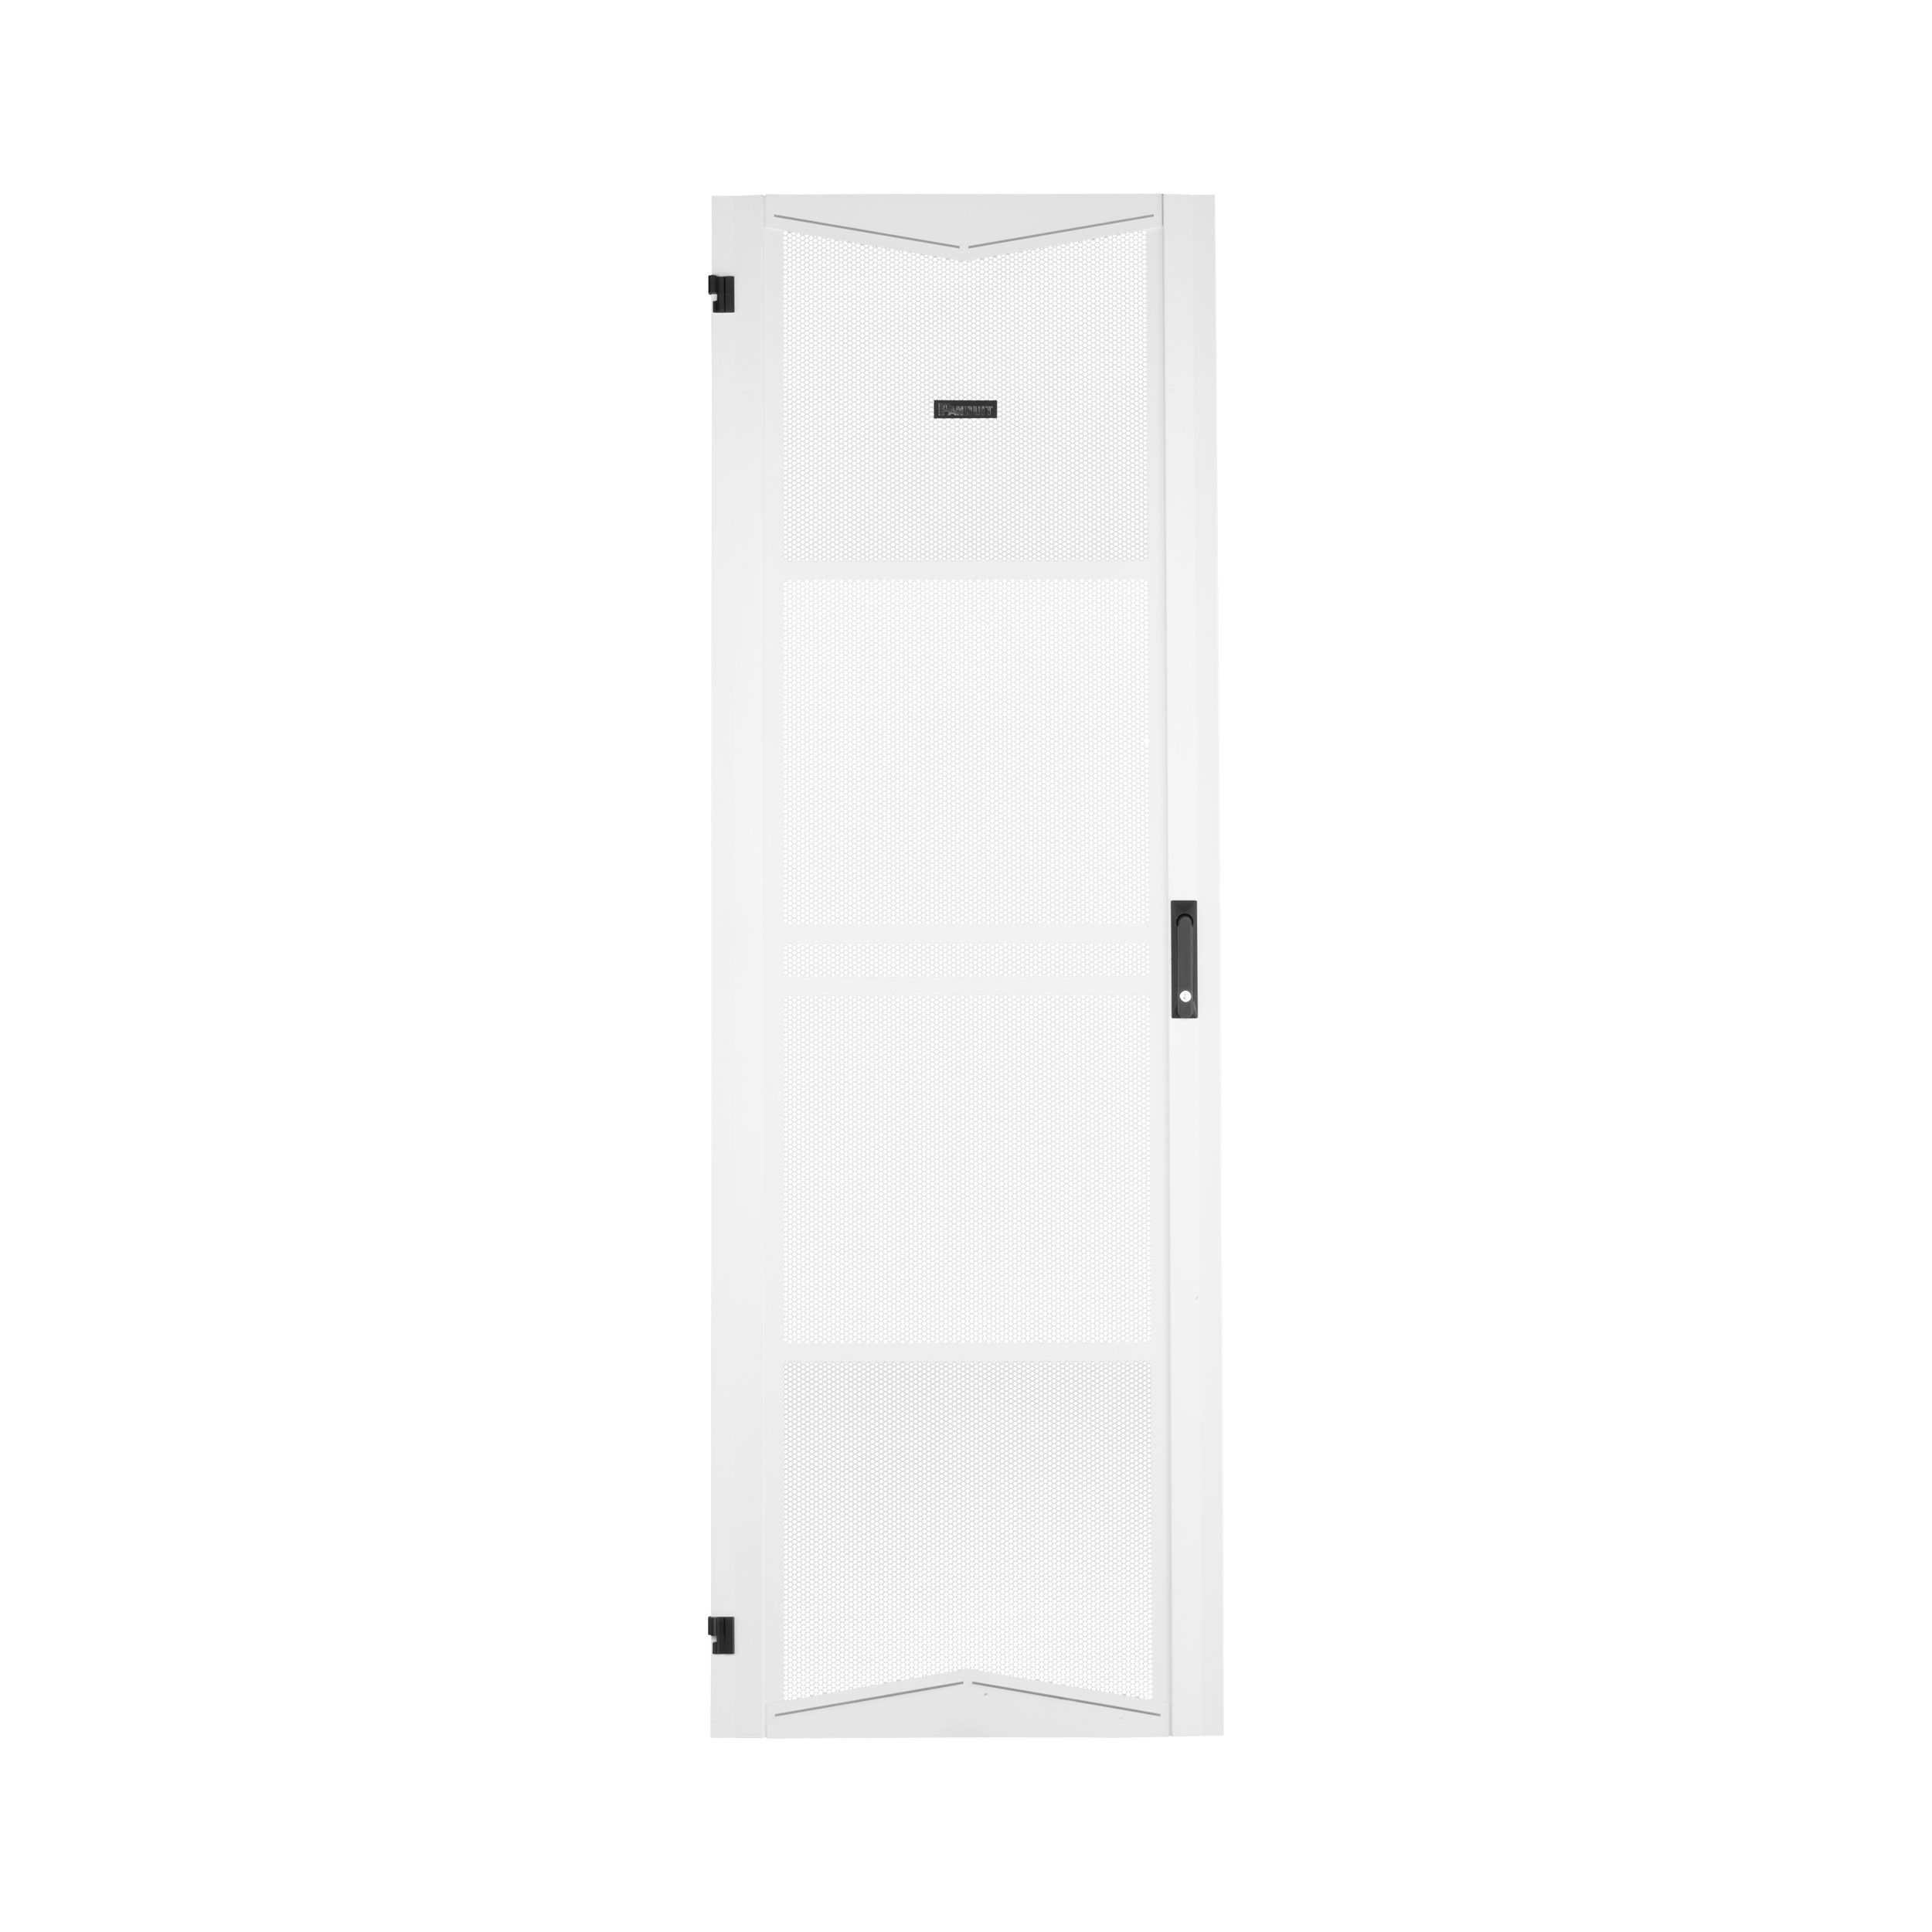 Single Hinged Door, Perforated, 800mmx42RU,White